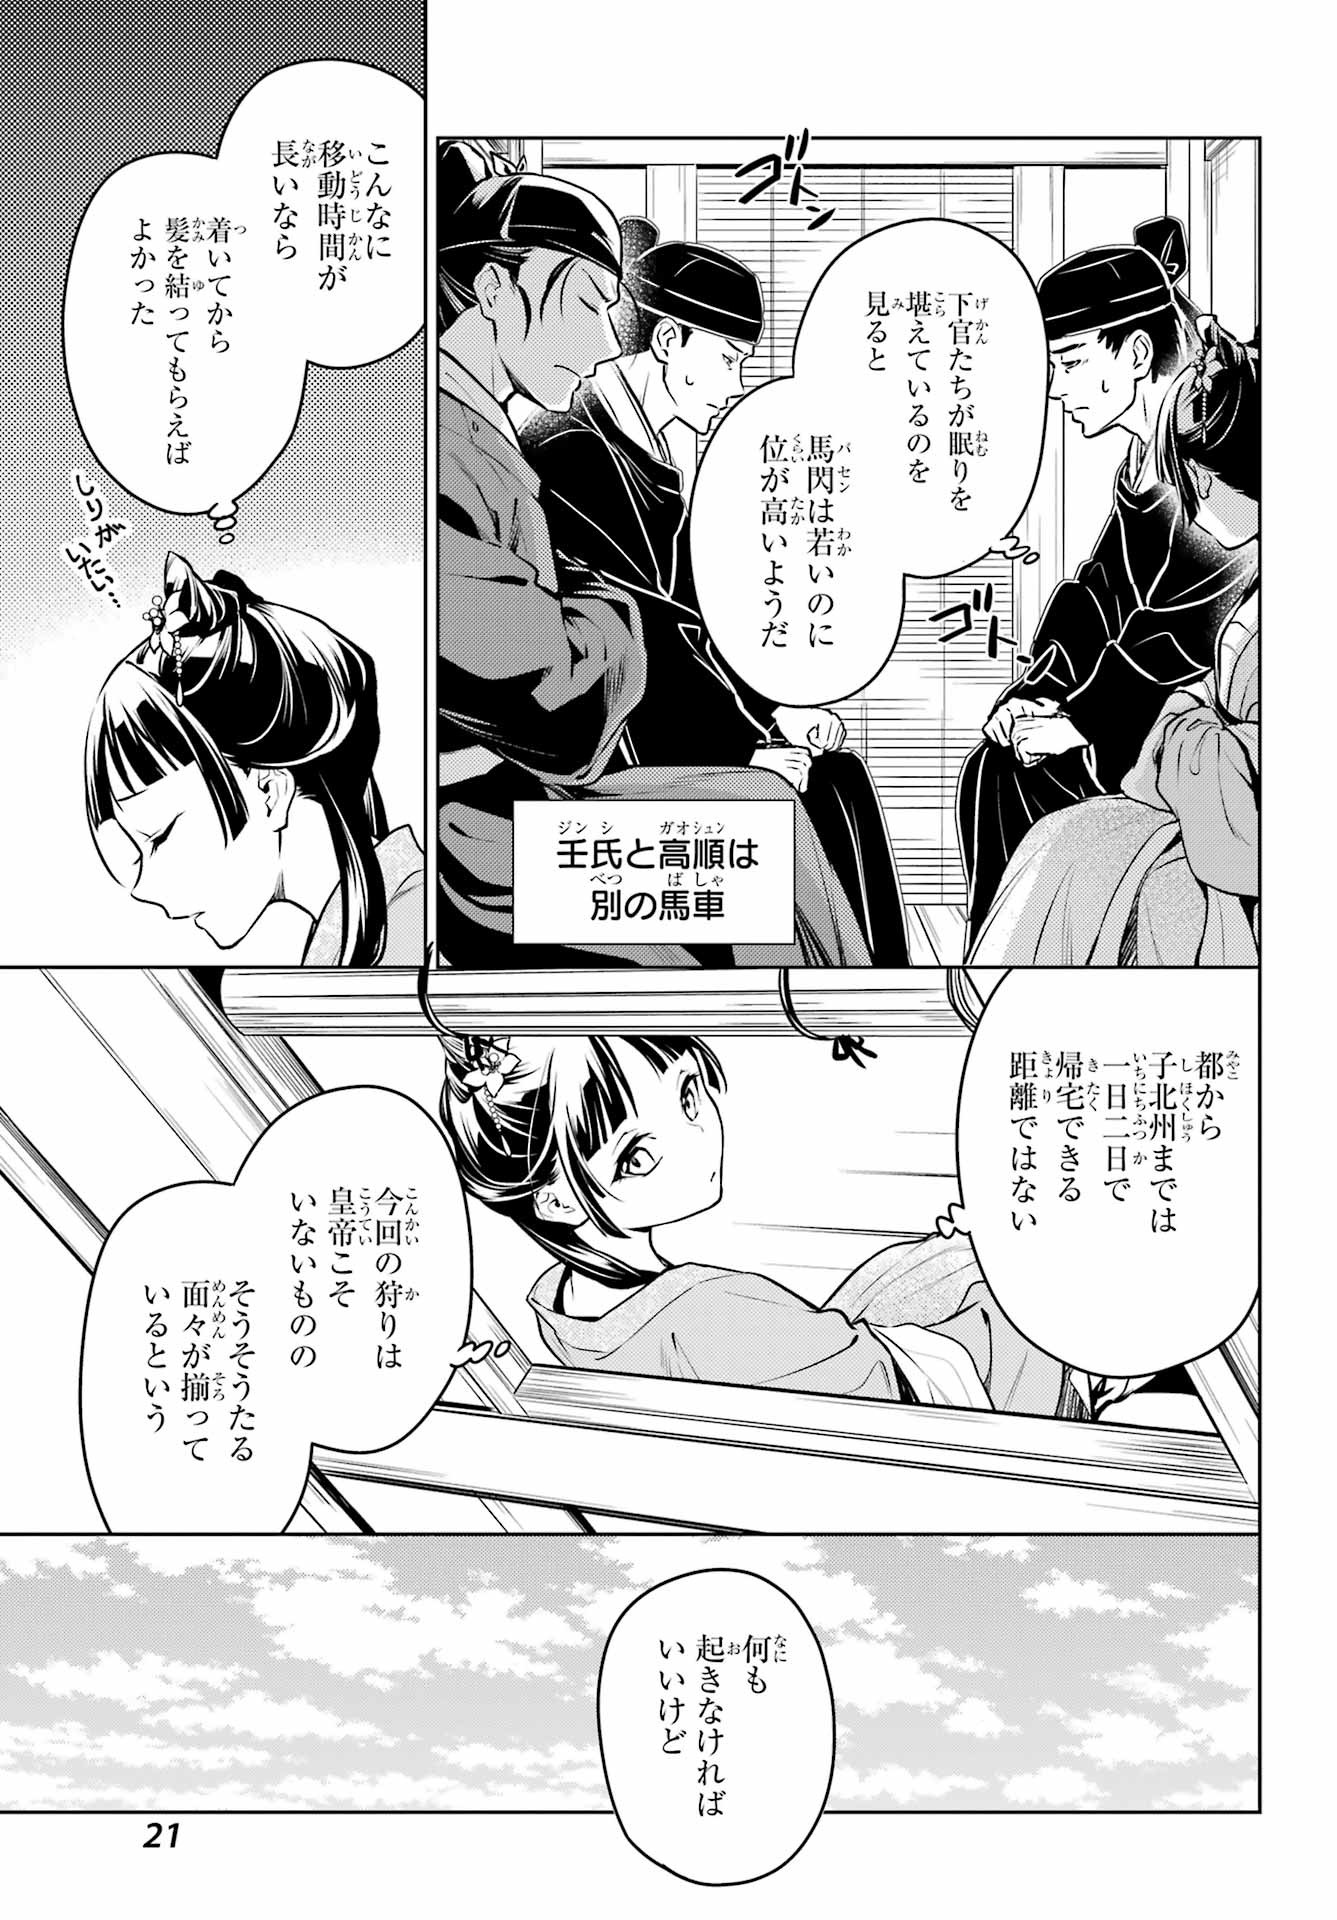 Kusuriya no Hitorigoto - Chapter 60-1 - Page 15